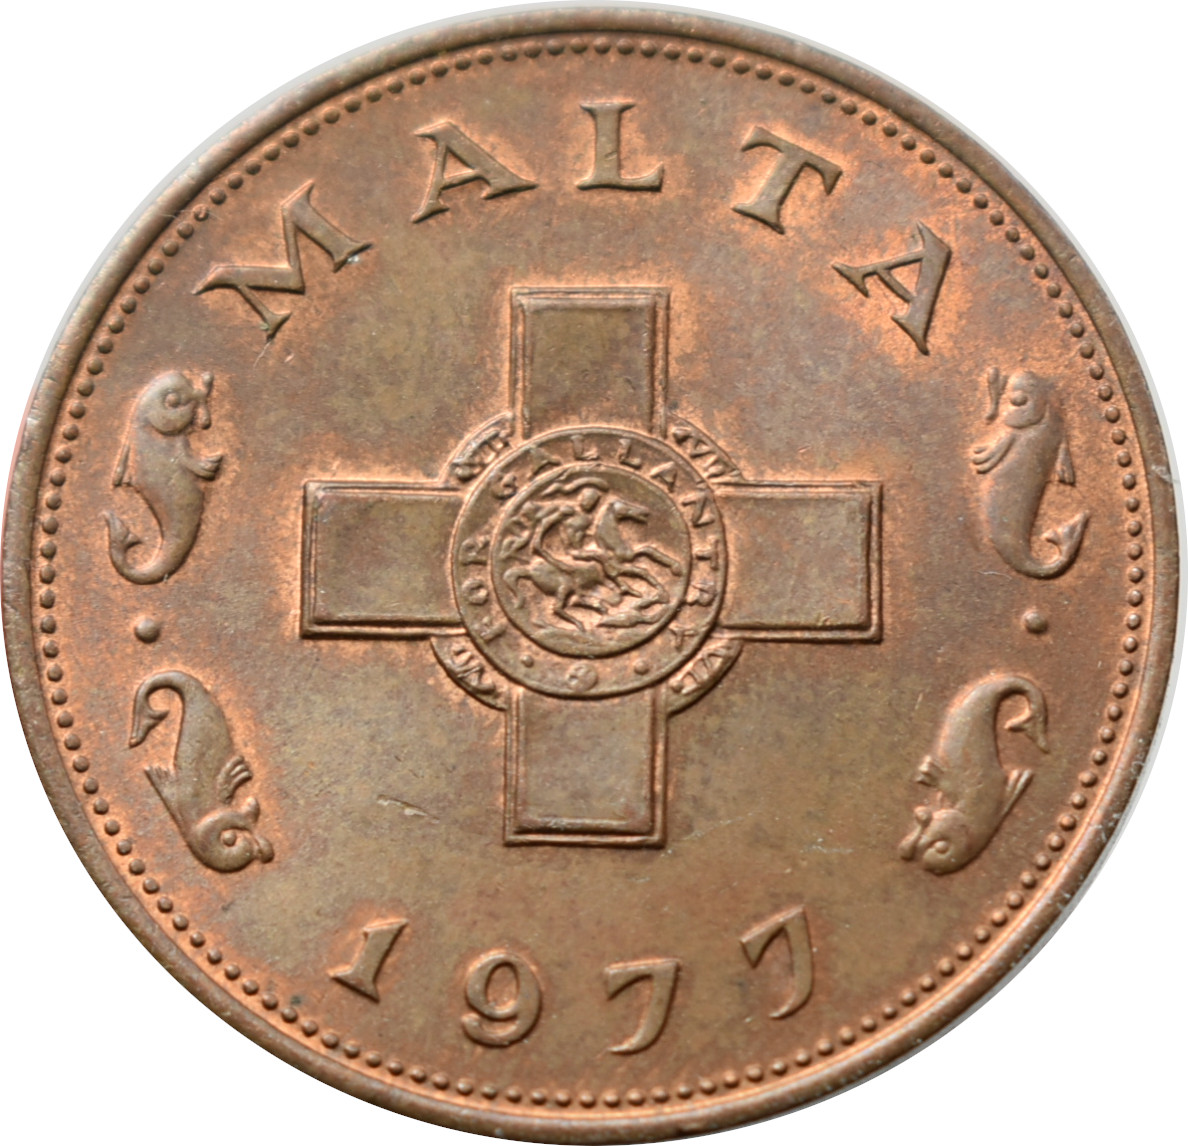 Malta 1 Cent 1977